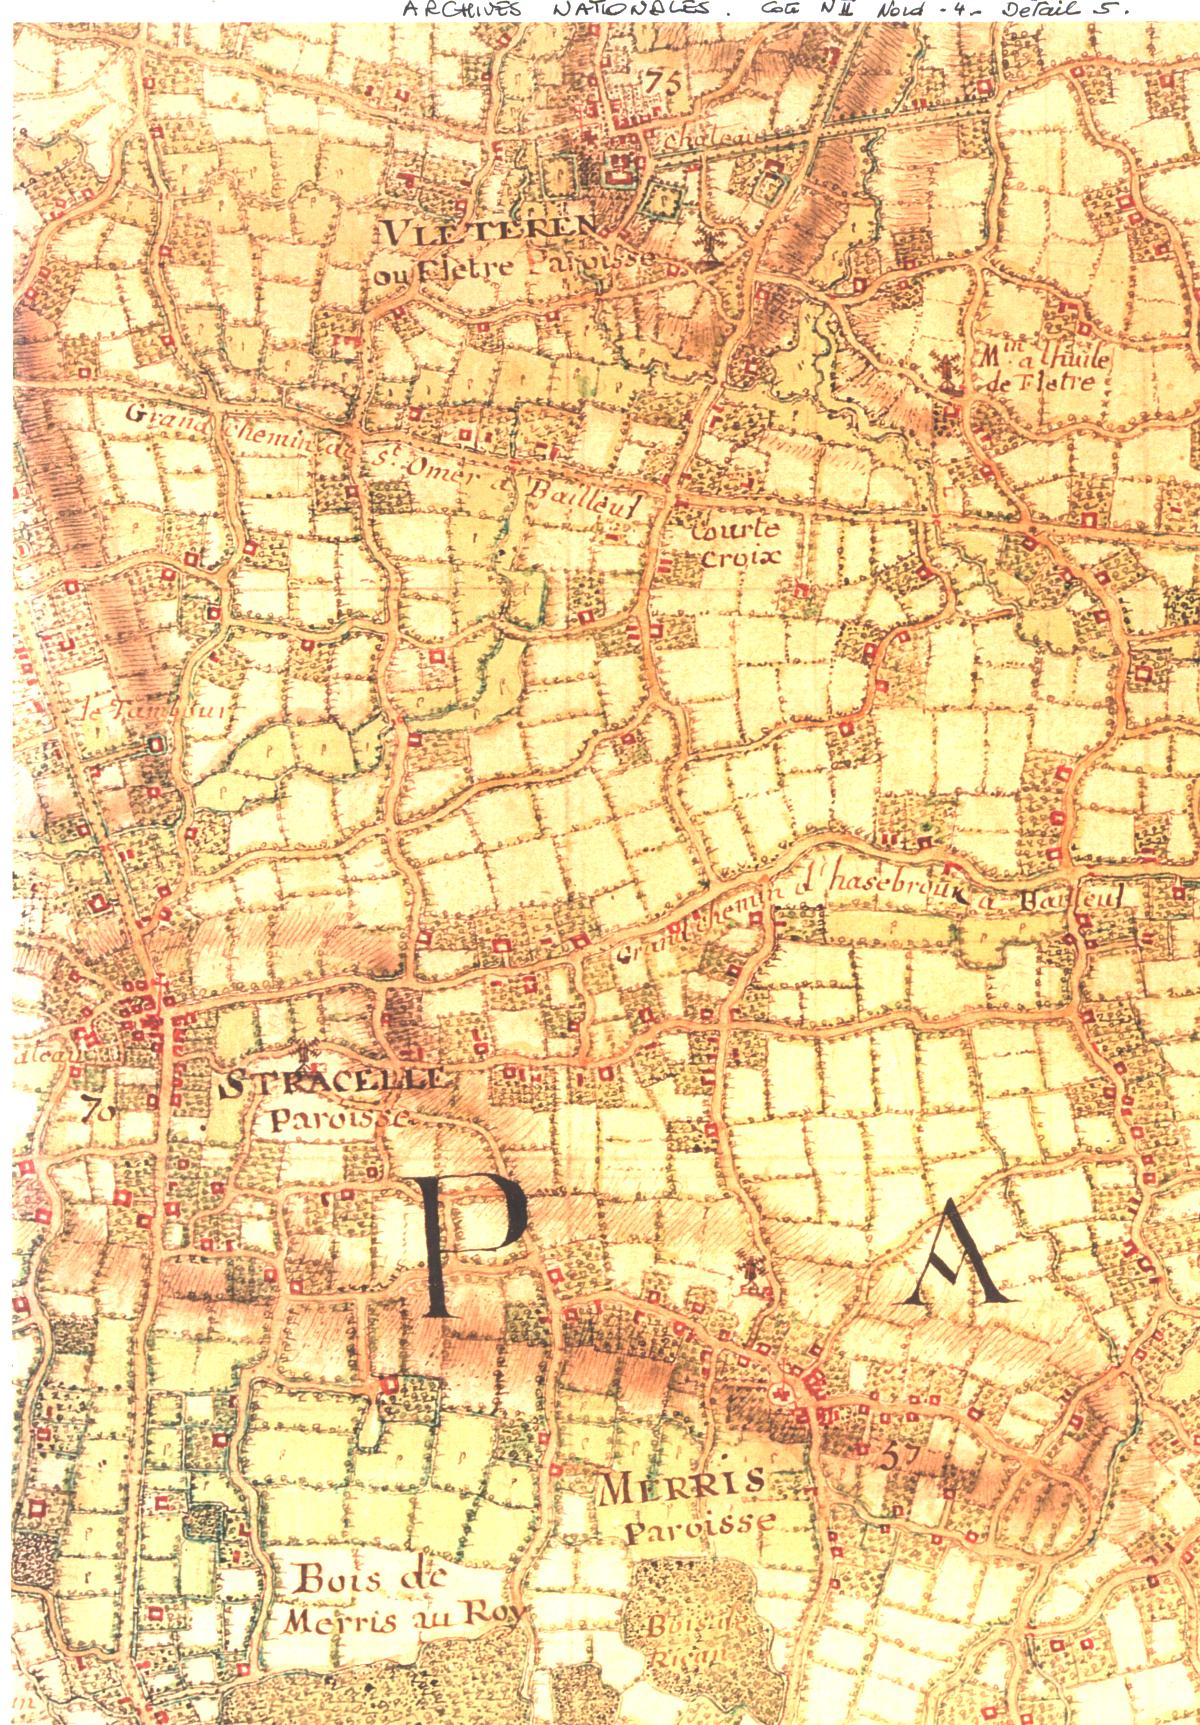 Carte masse fletre vleteren en 1750